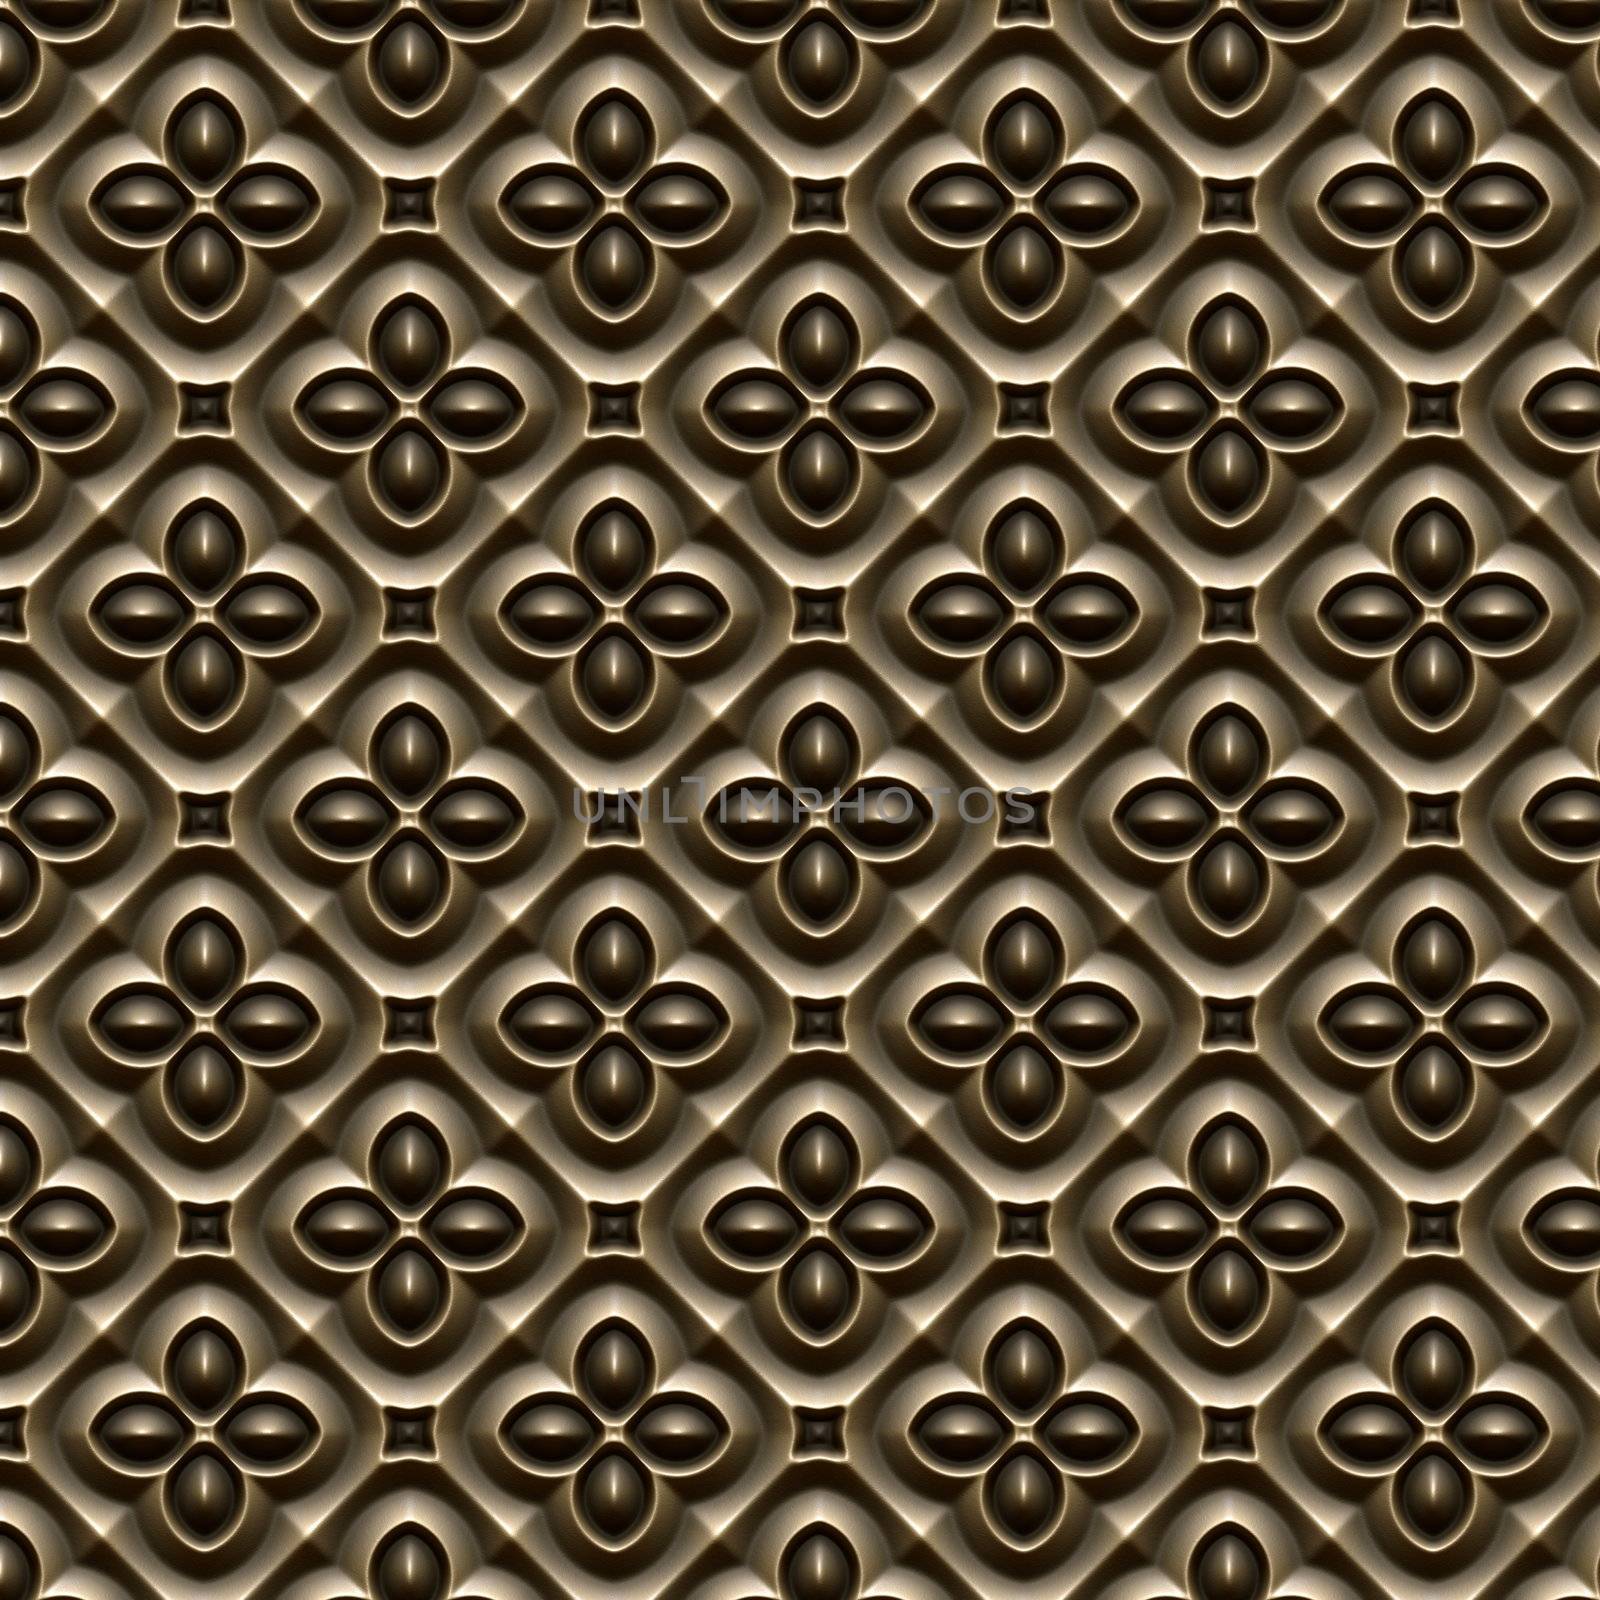 bronze seamless tileable decorative background pattern